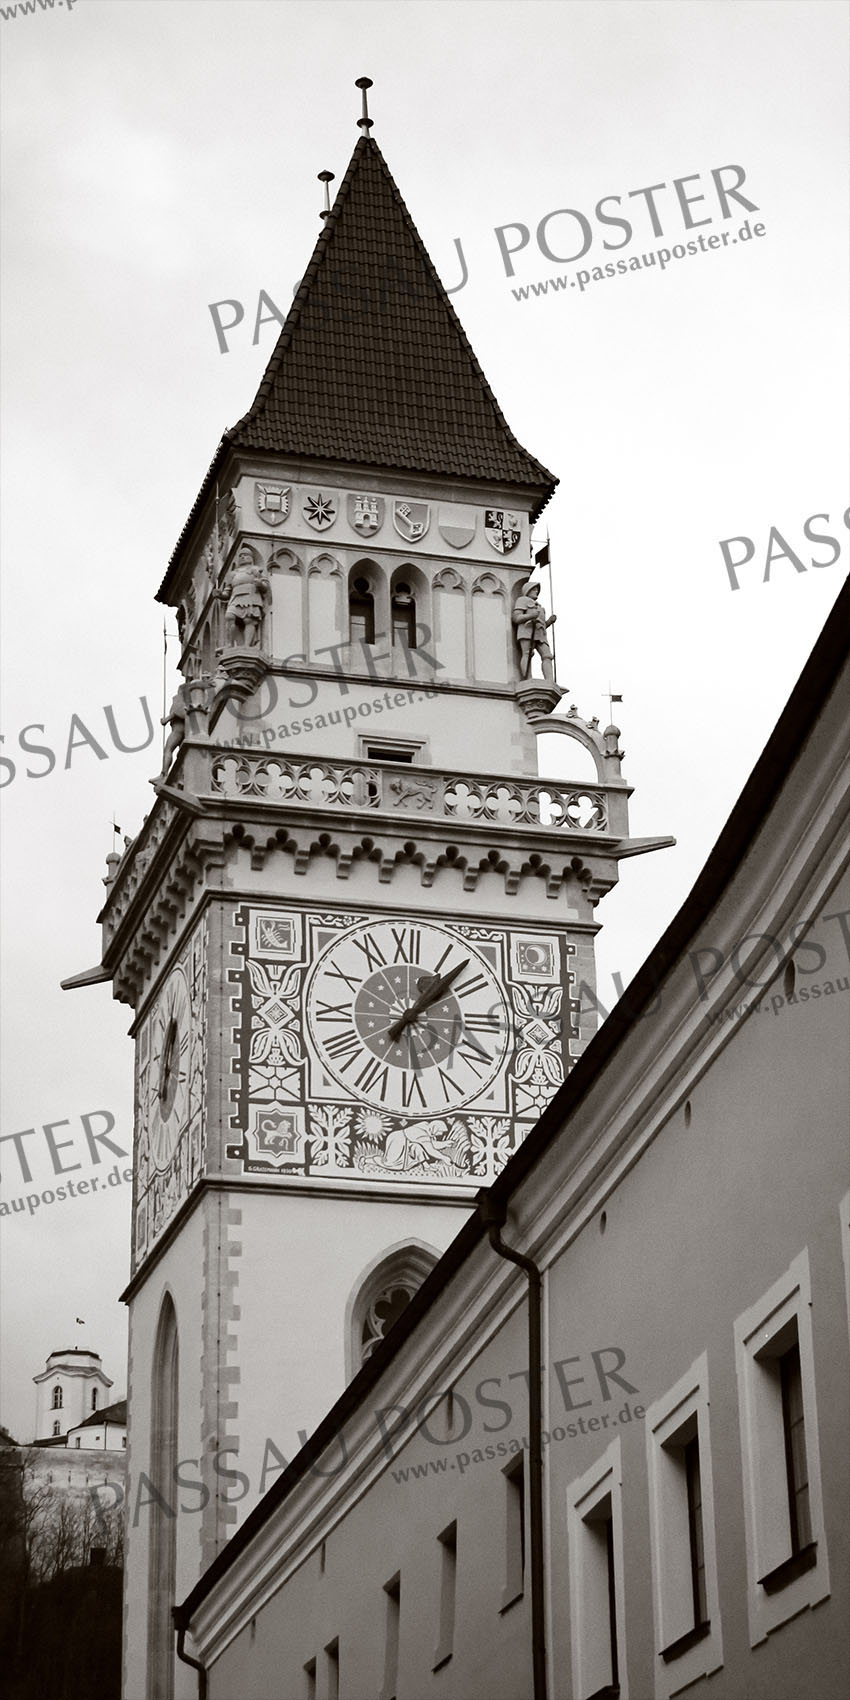 Passau Poster - Passauer Ansichten